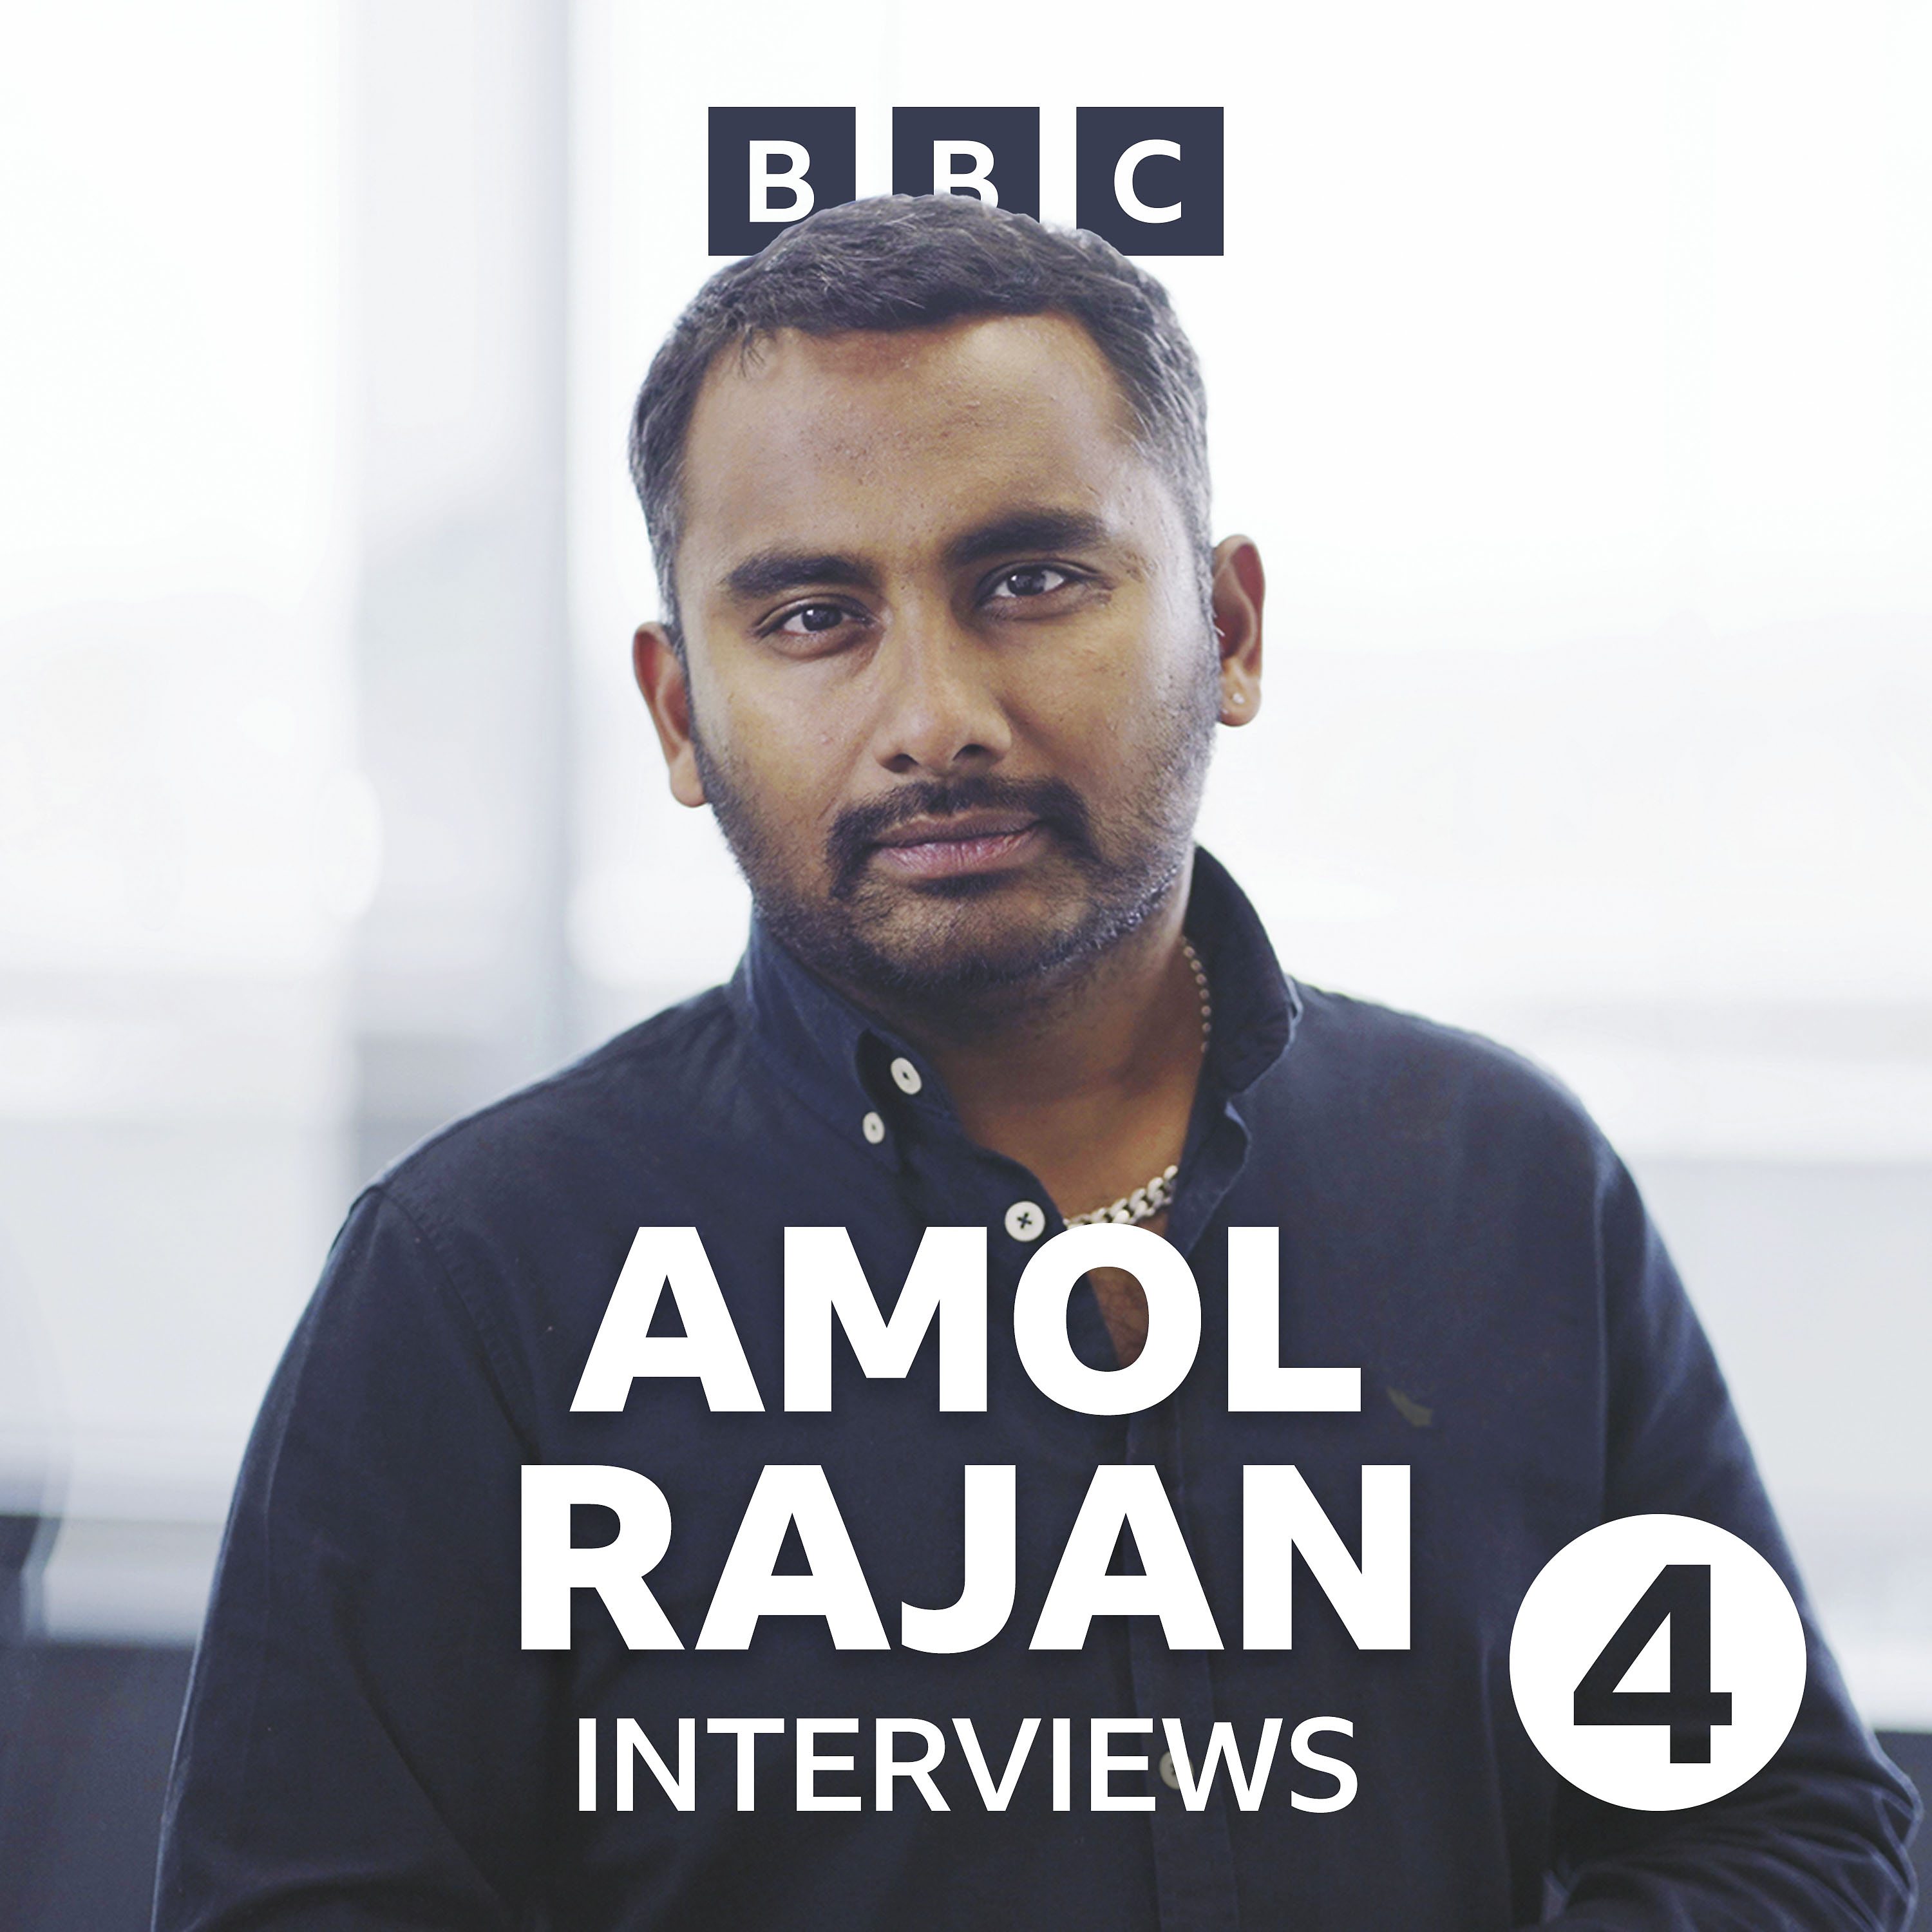 Amol Rajan Interviews... podcast show image